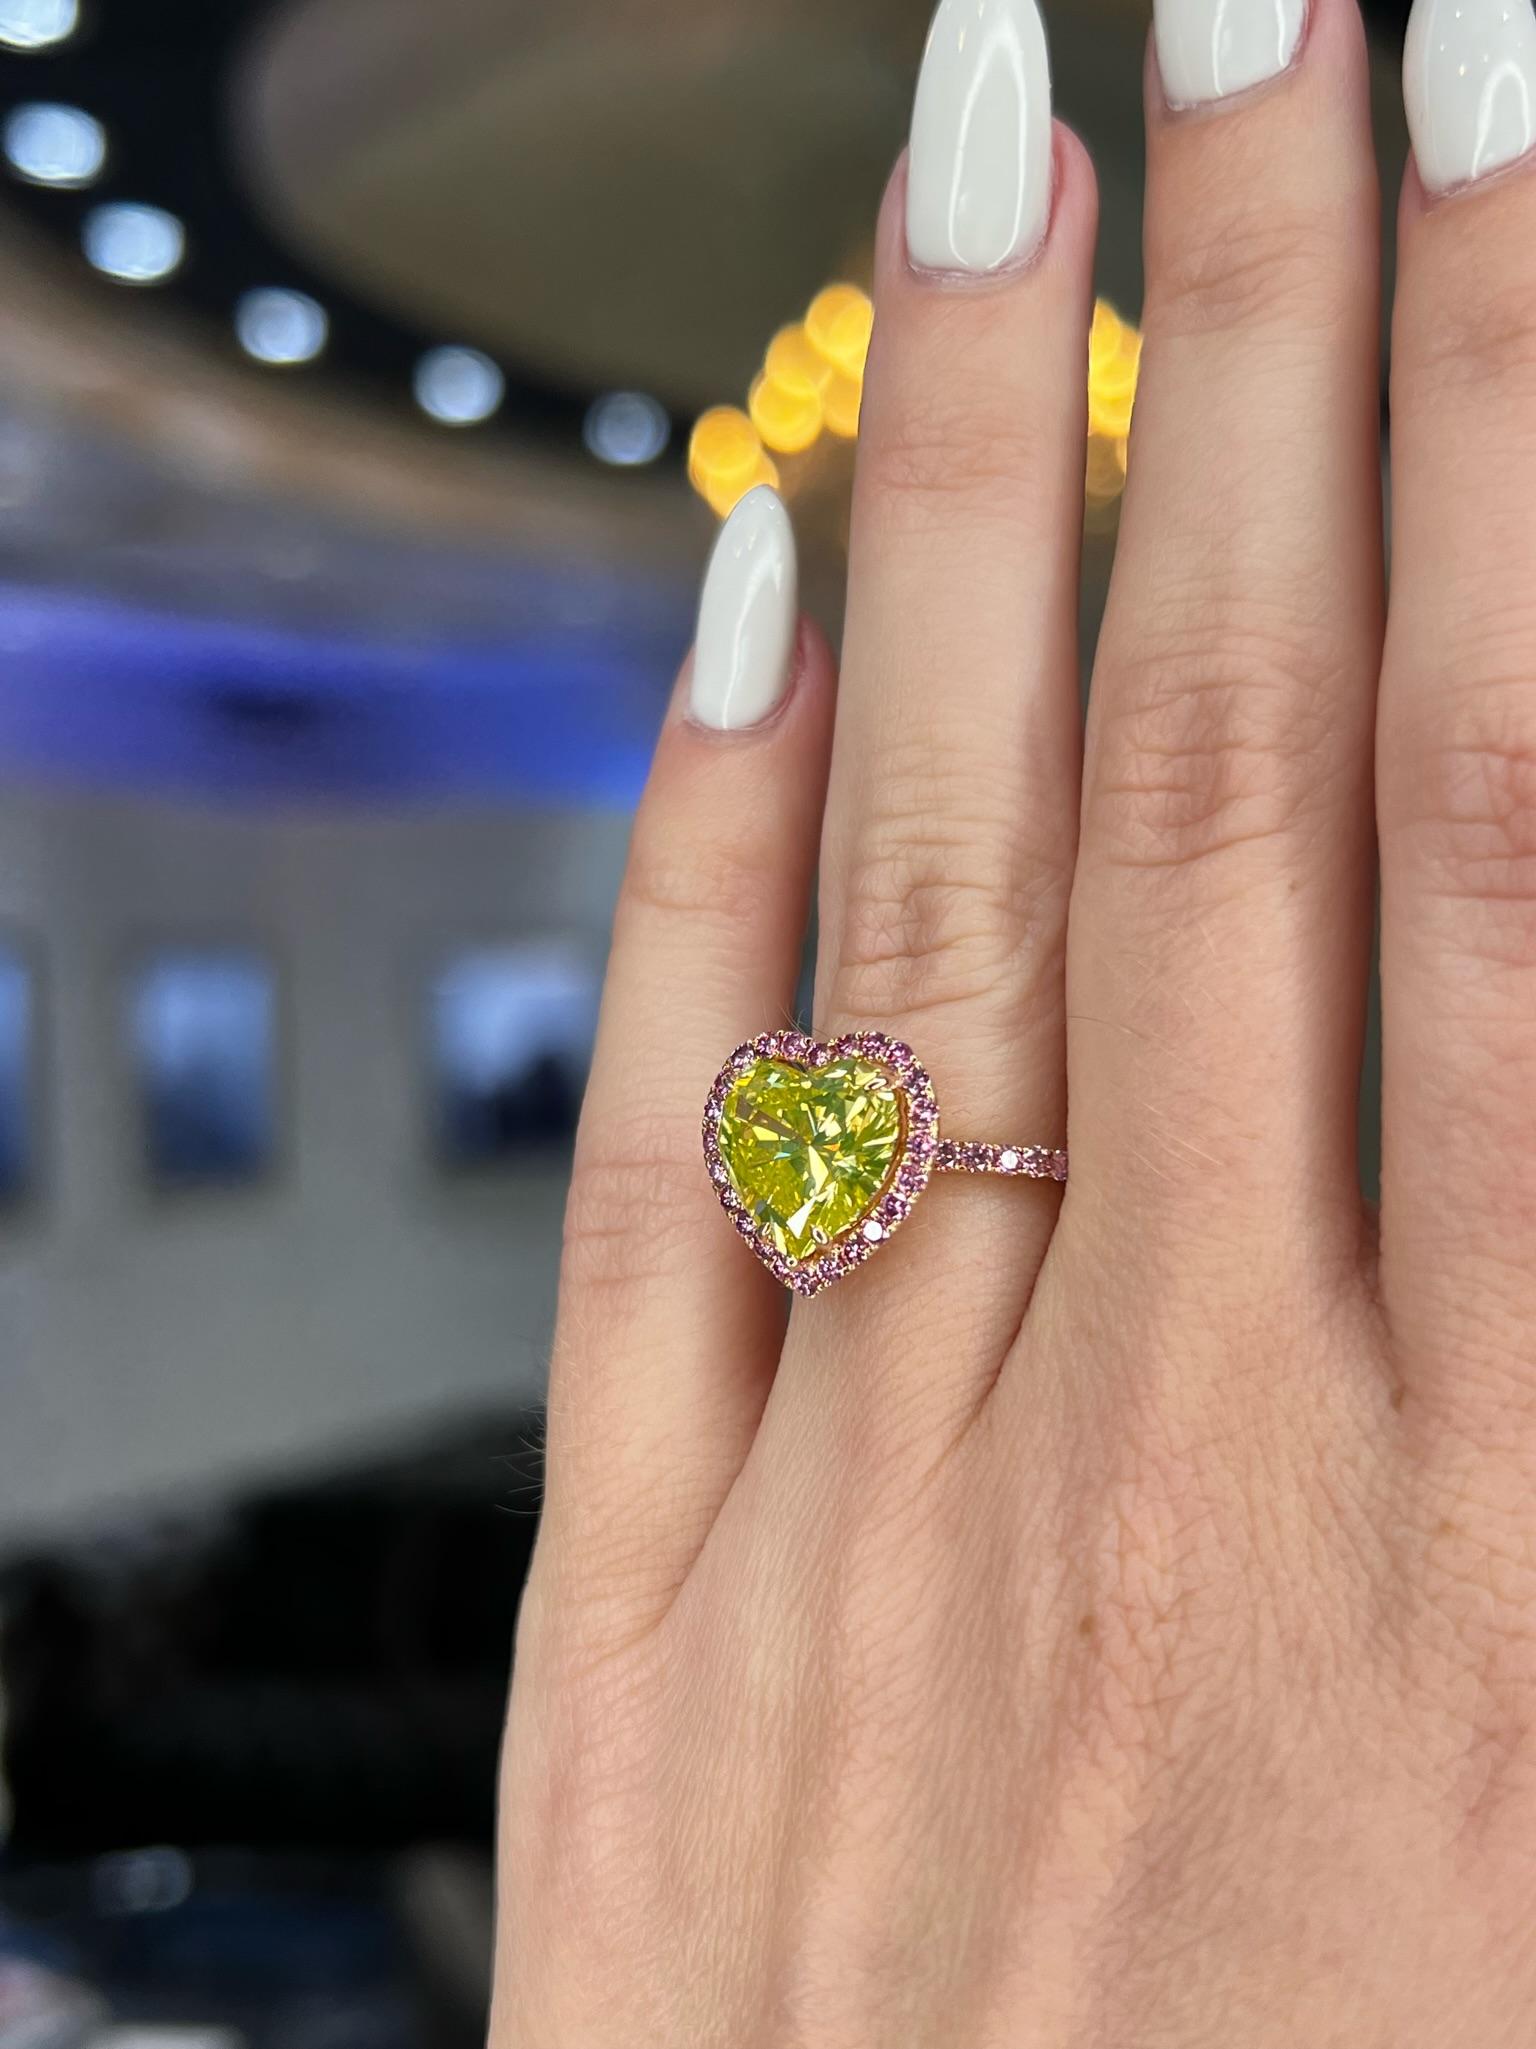 David Rosenberg 4.27ct Heart Shape Fancy Vivid Green Yellow GIA Diamond Ring  For Sale 2